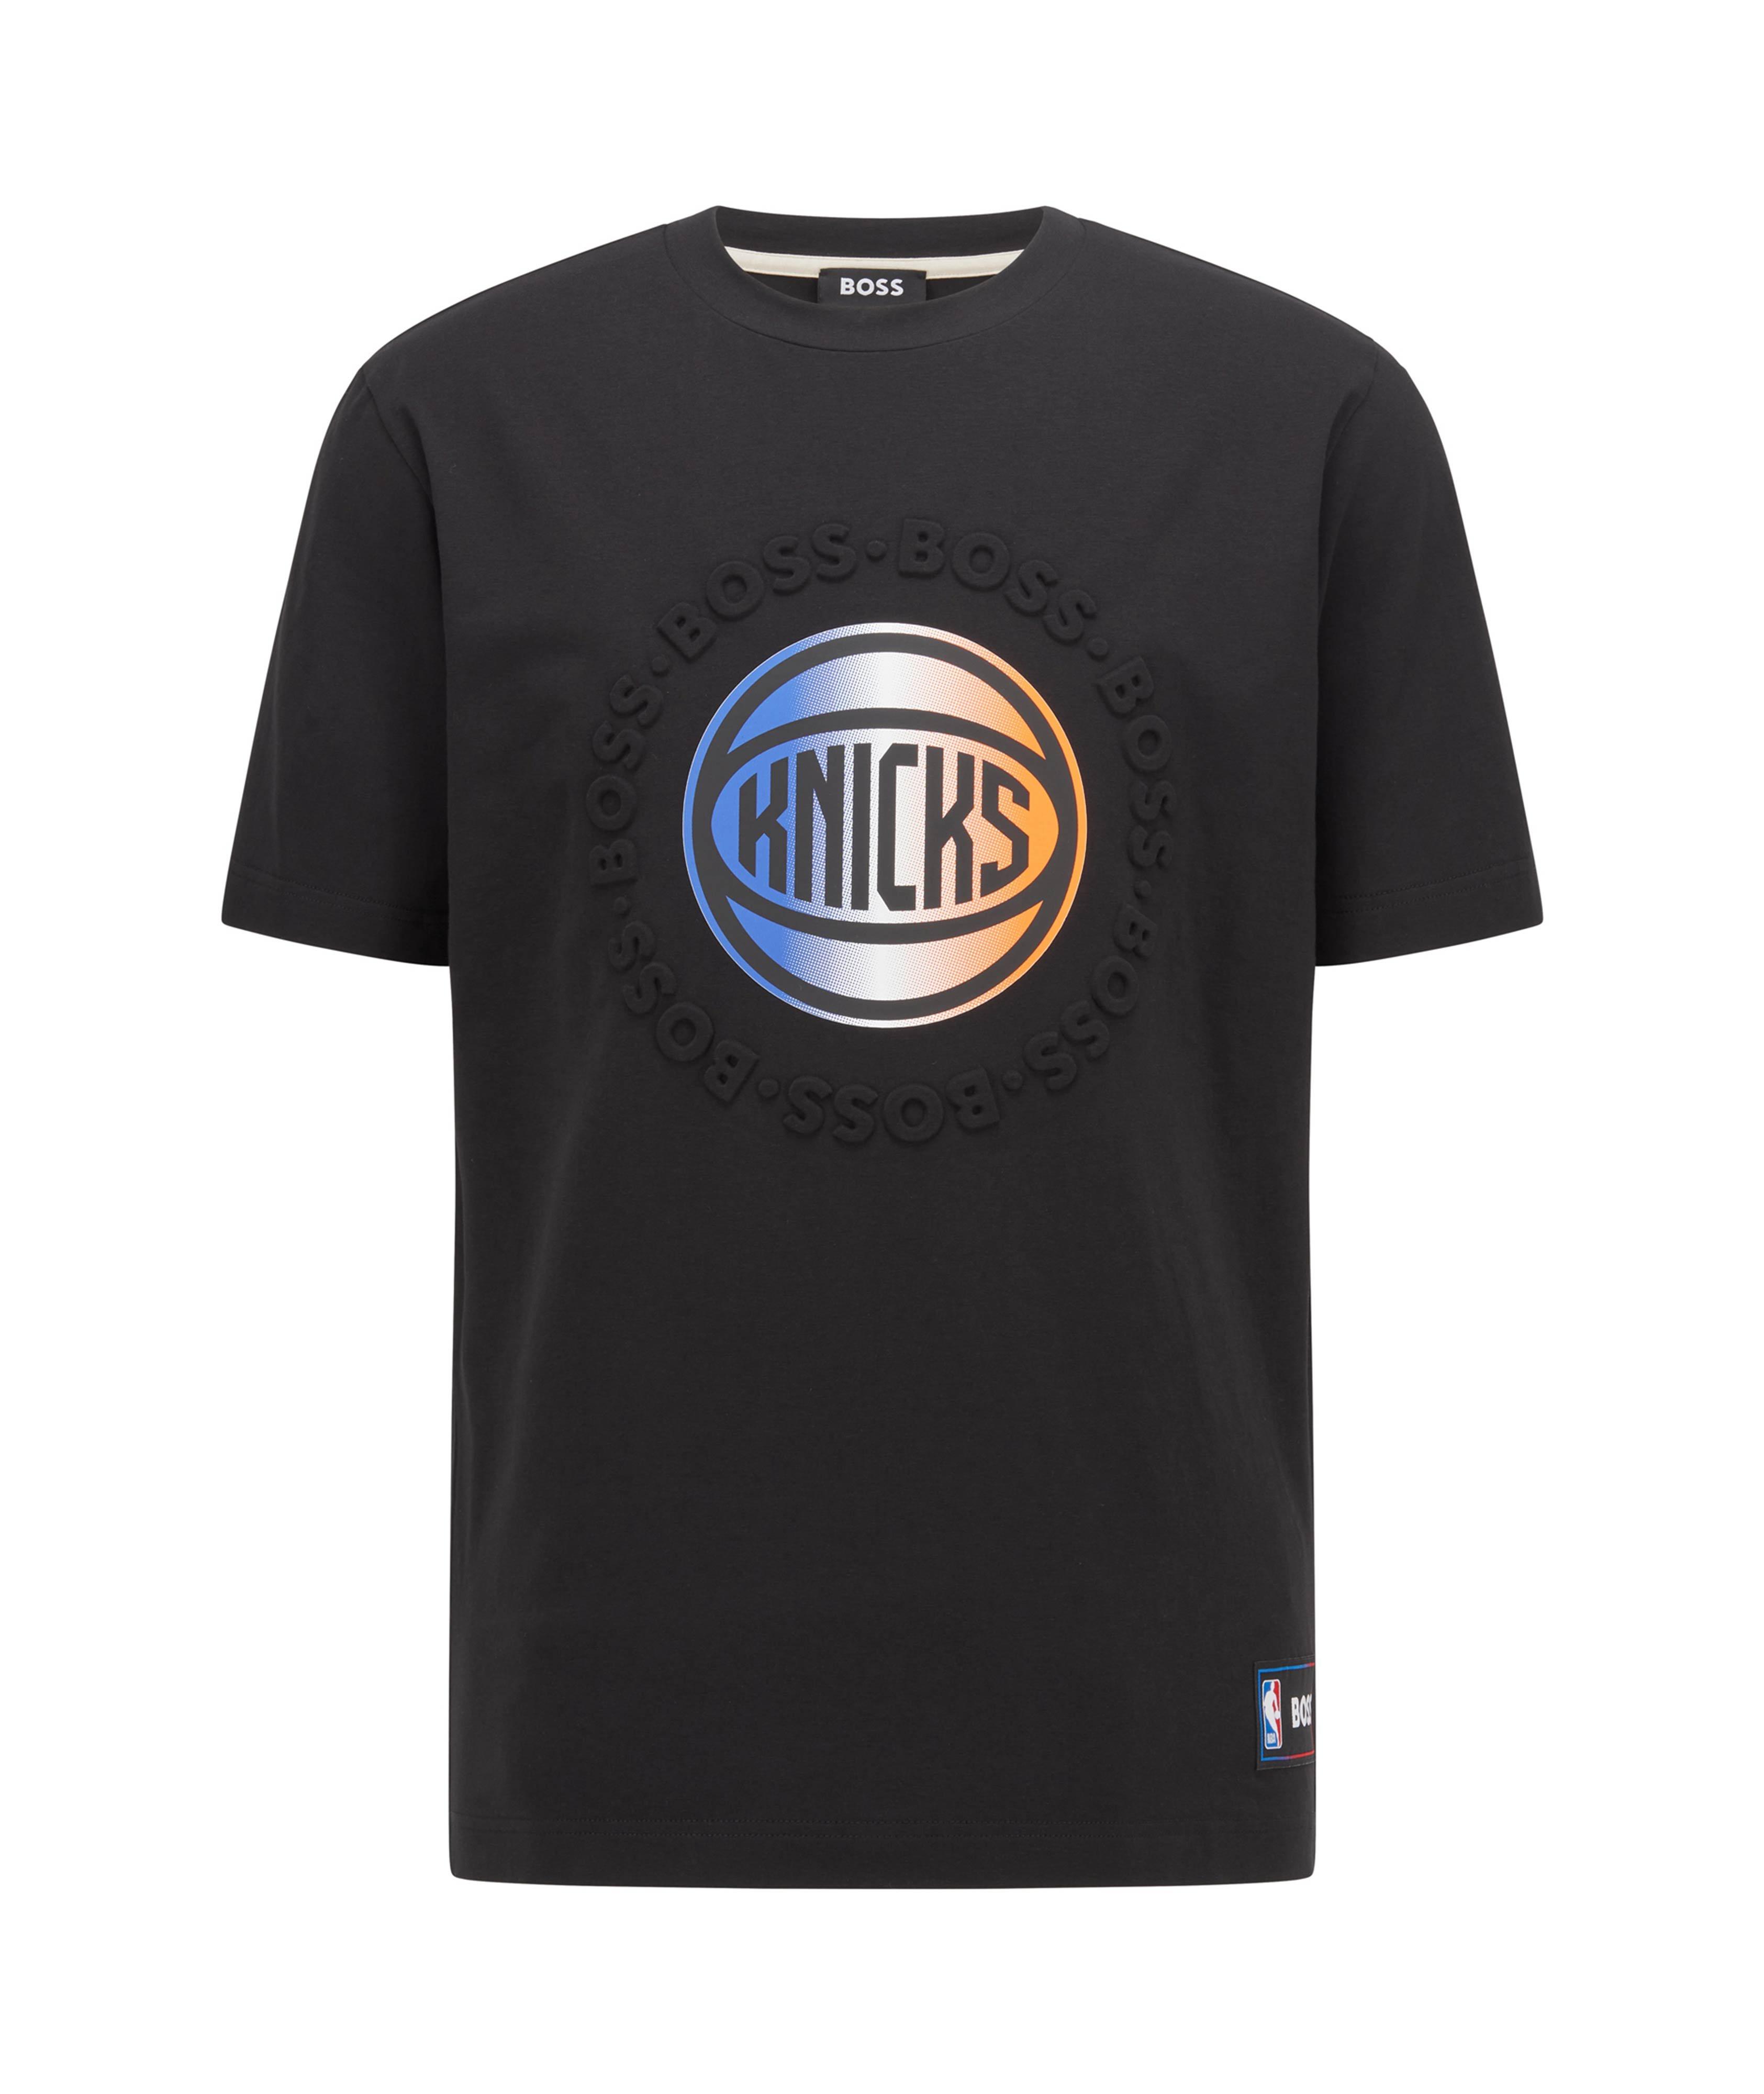 BOSS x NBA Knicks Logo T-Shirt image 0